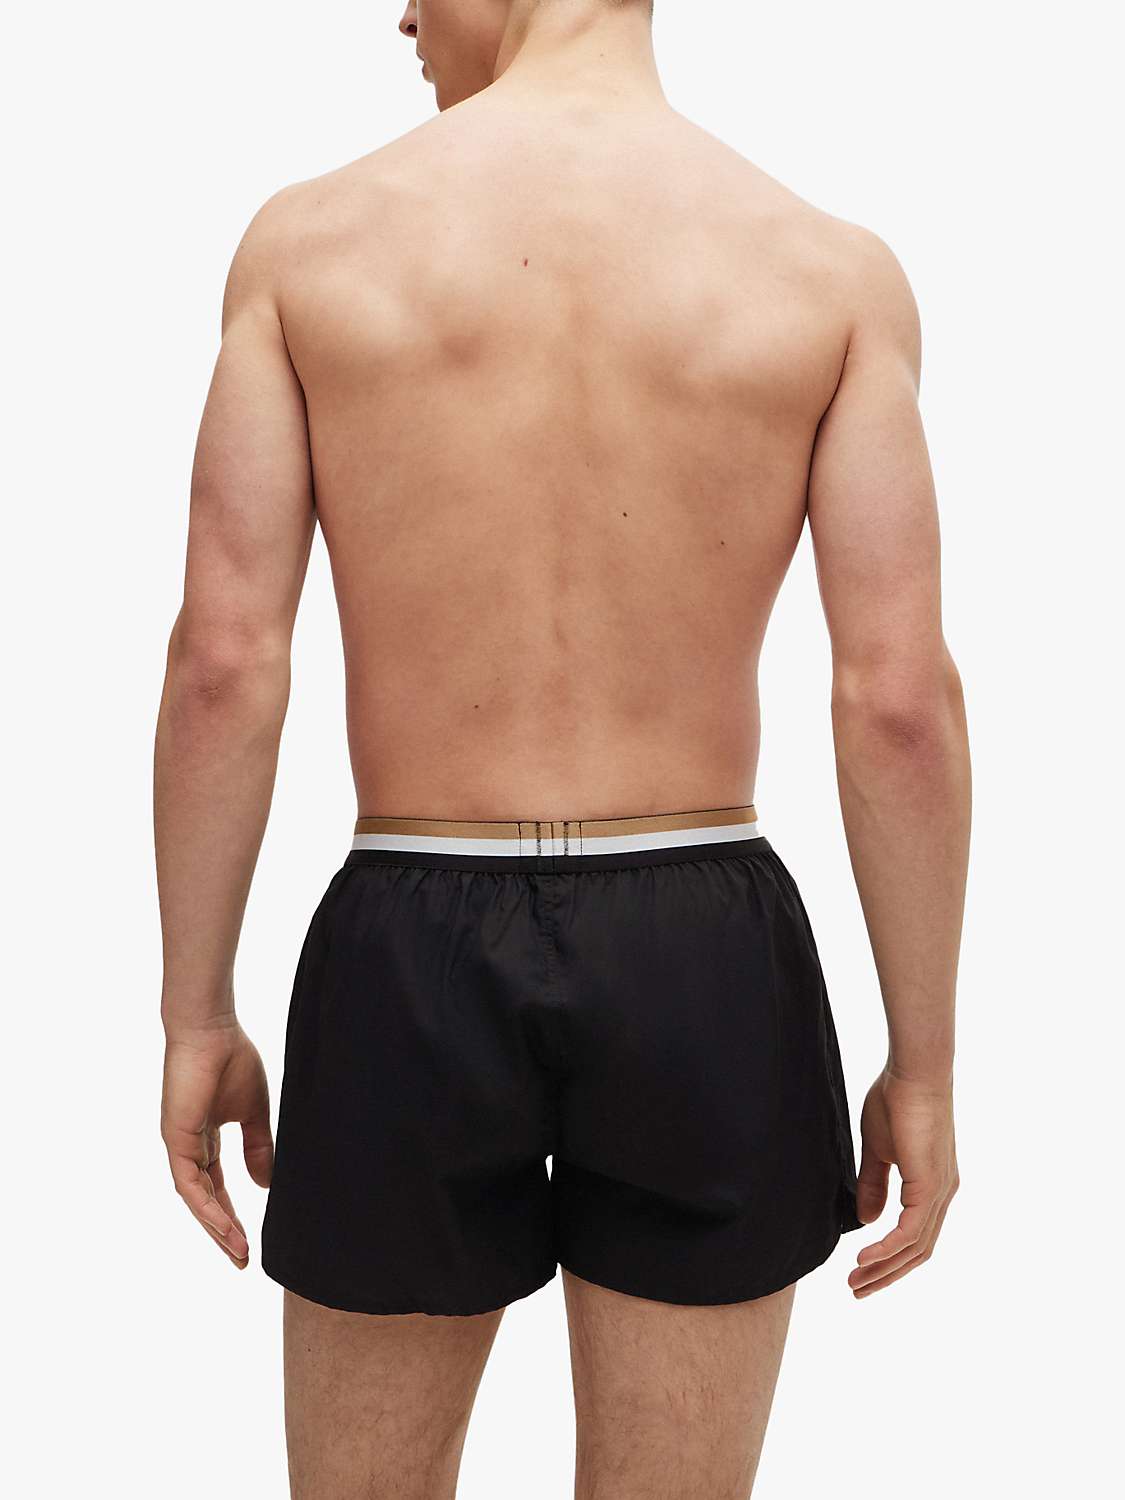 Buy BOSS Boxer Shorts, Pack of 2, Beige/Black Online at johnlewis.com